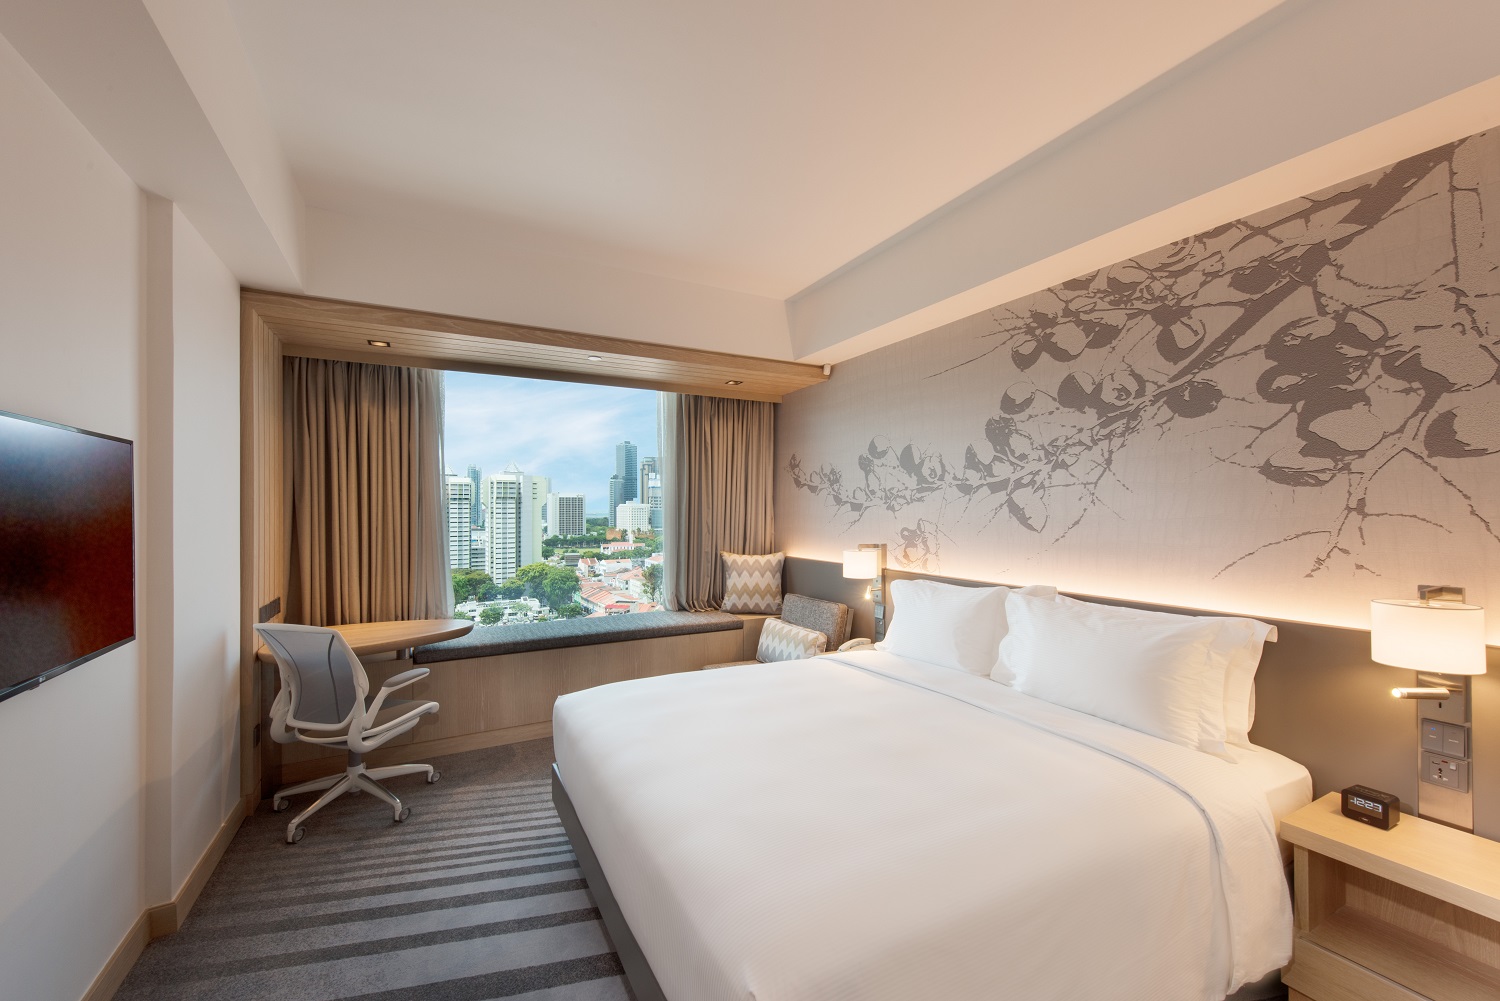 Hilton Garden Inn opens in Singapore.